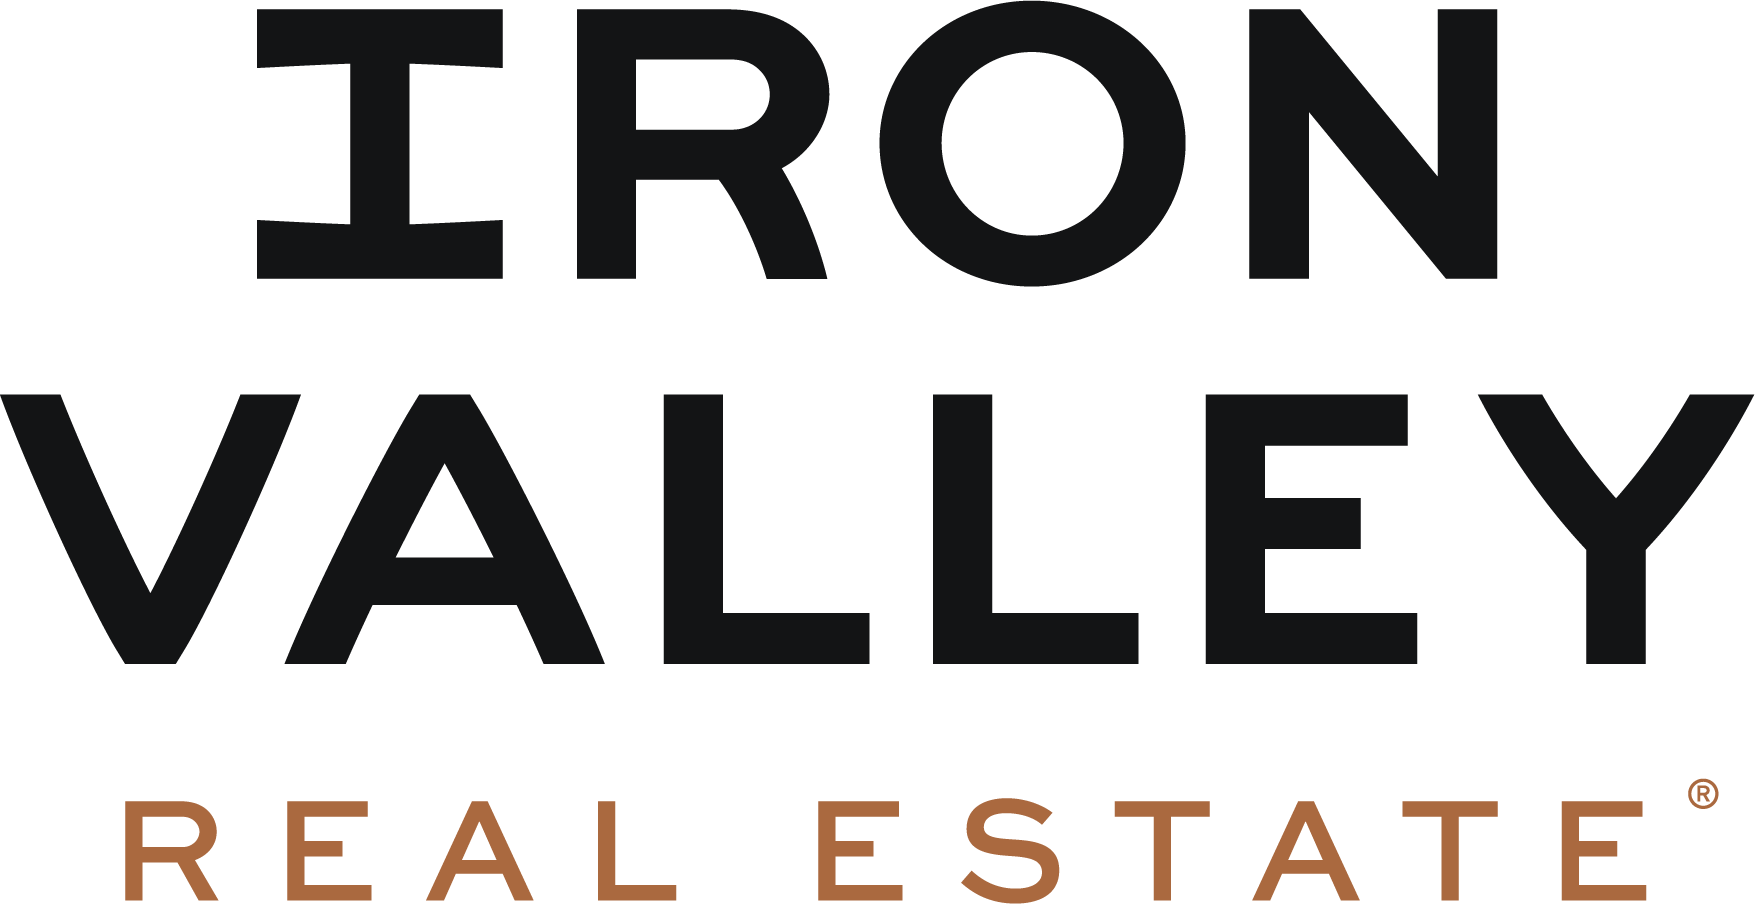 Iron Valley Real Estate